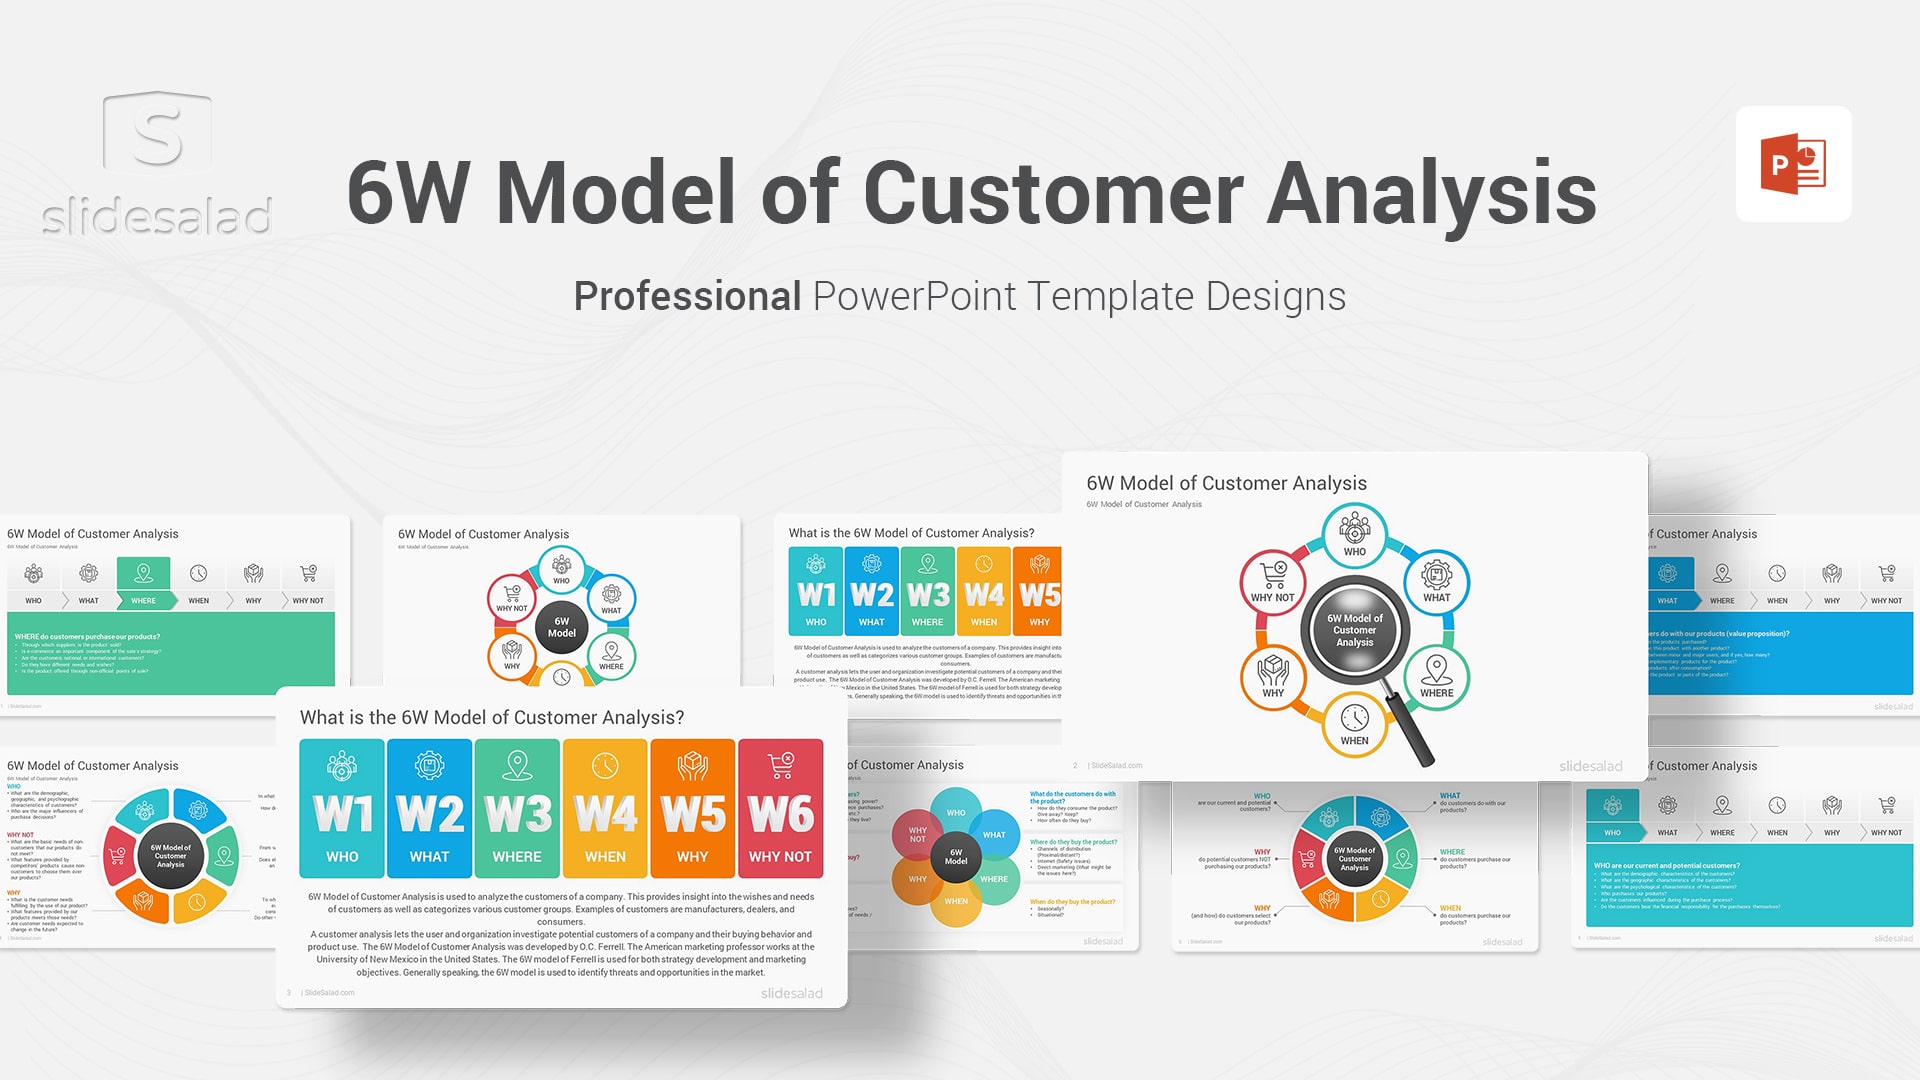 6W Model of Customer Analysis PowerPoint Template - Stunning Visual Representation of 6W Model of Customer Analysis